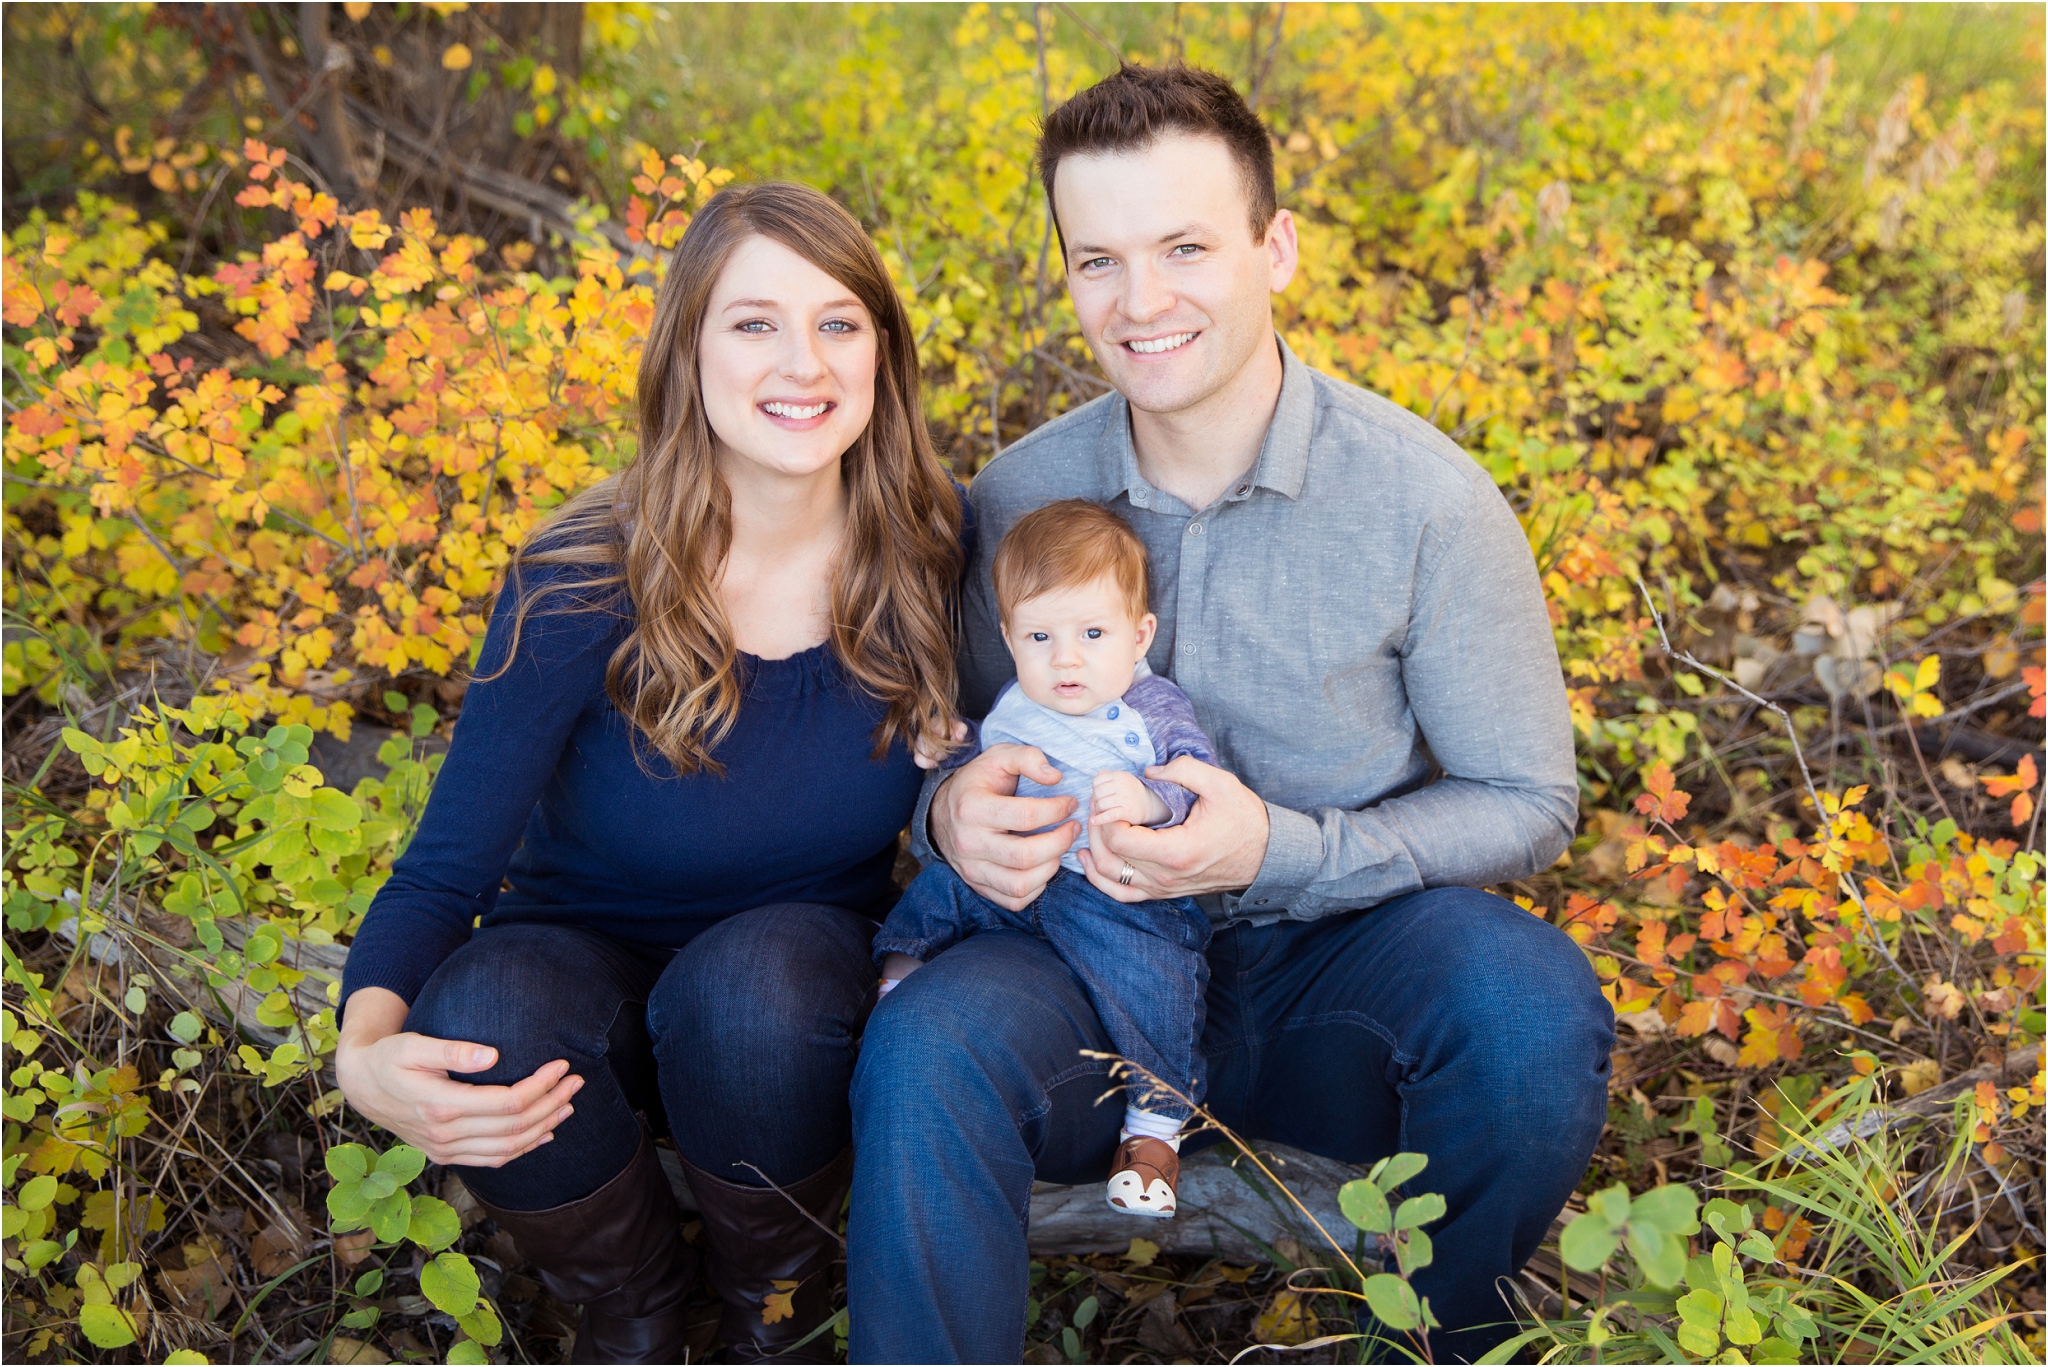 Edmonton Family Photographer|Fall Family Portraits|